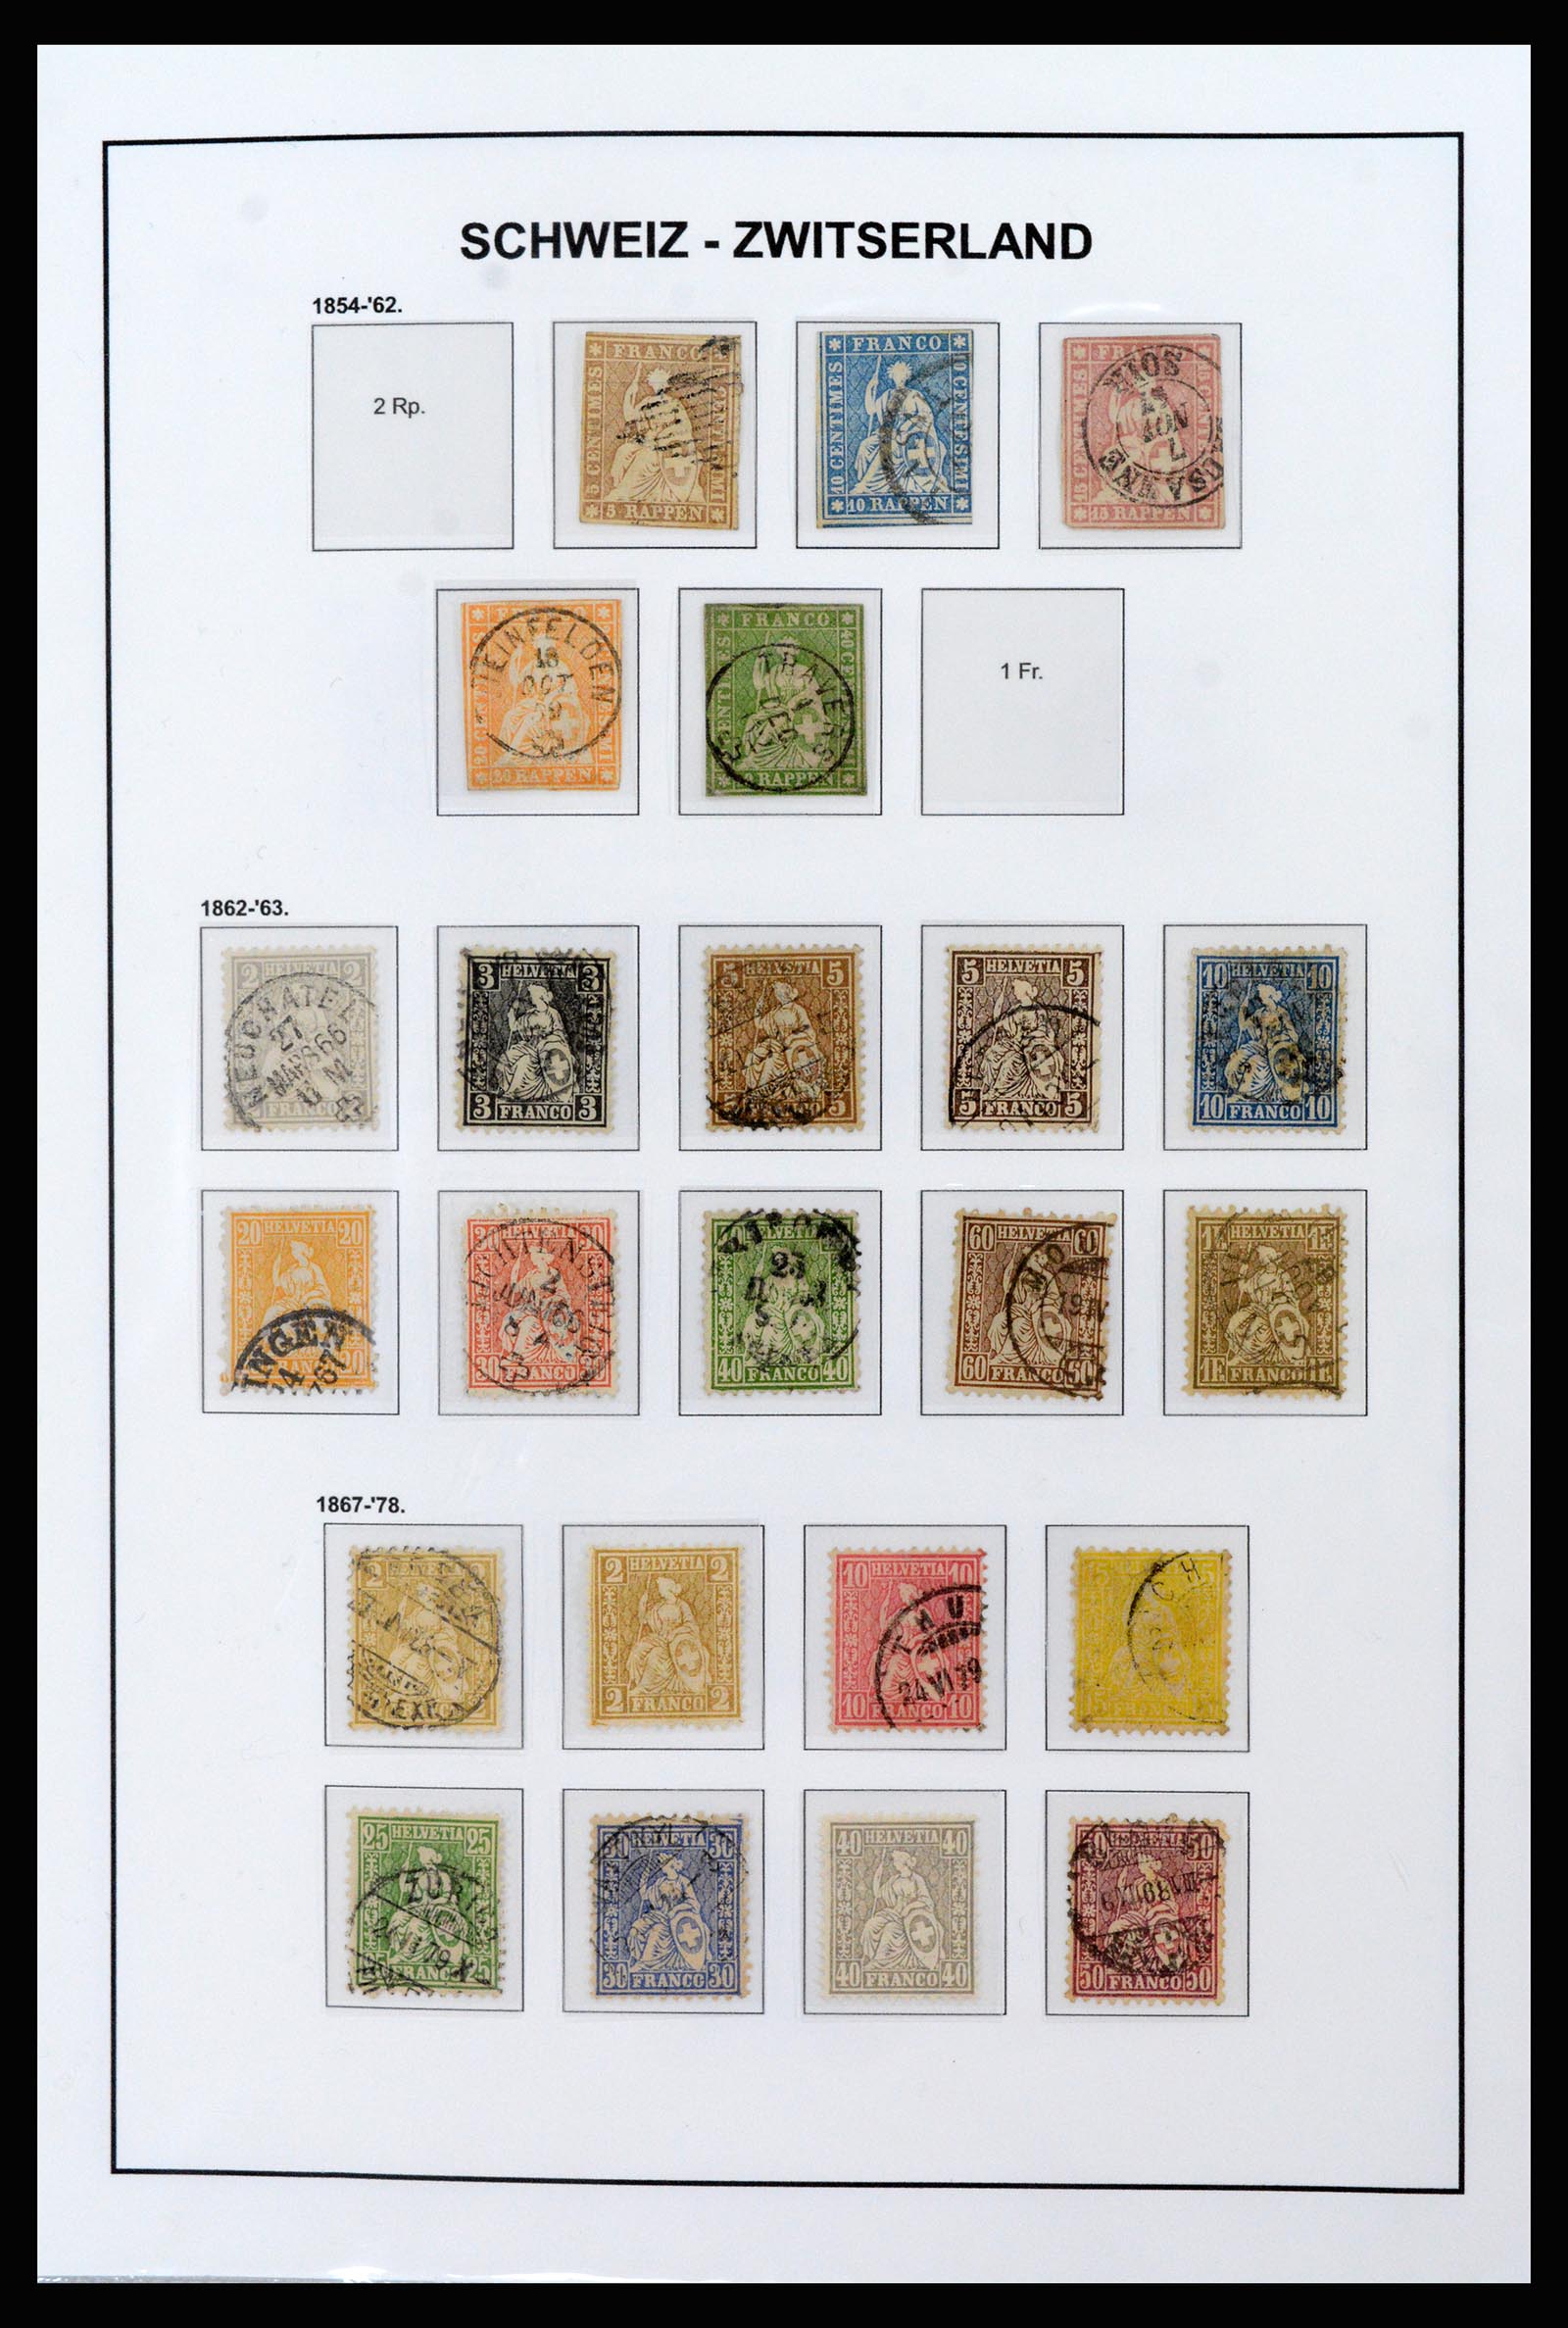 37225 001 - Stamp collection 37225 Switzerland 1854-2020.